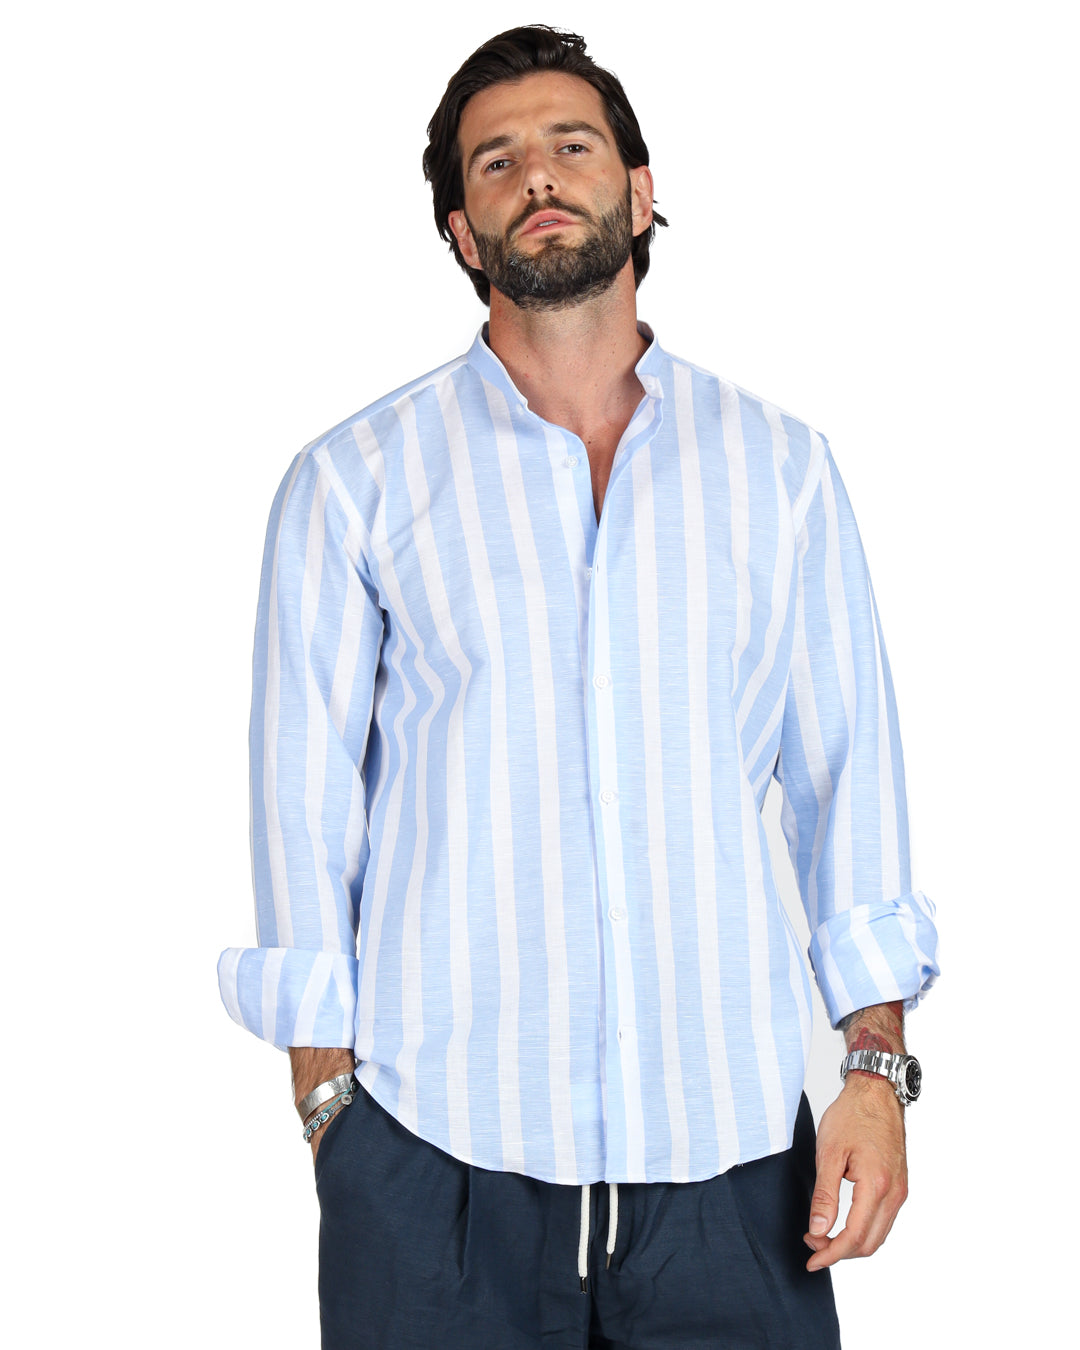 Amalfi - Korean shirt with maxi stripes in light blue